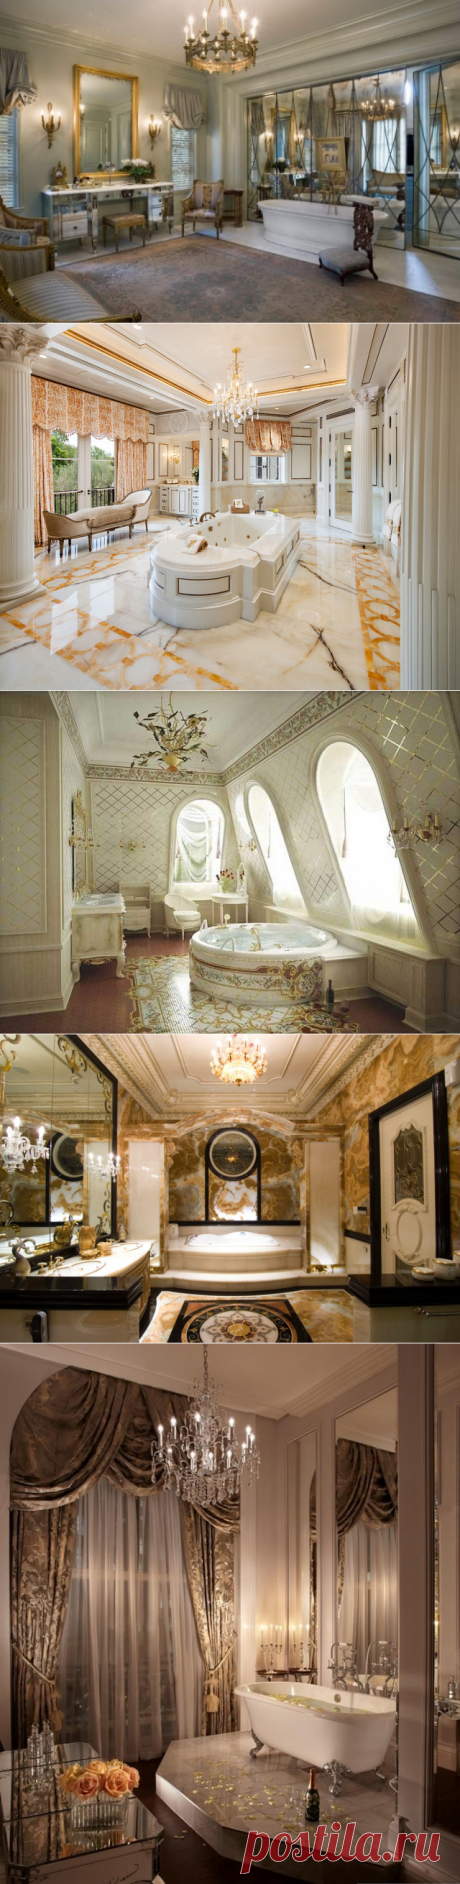 Bathrooms in the Rococo Style | Interior Design Pictures